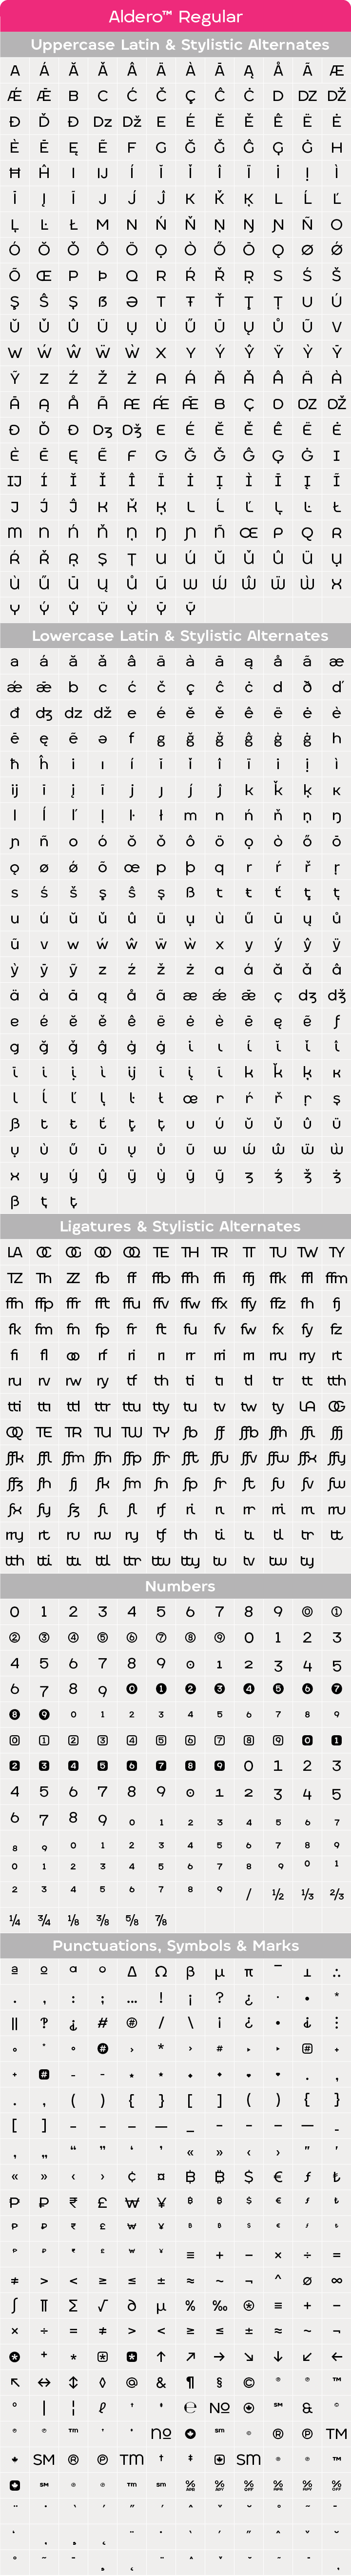 Aldero Regular Glyphs Table3.png